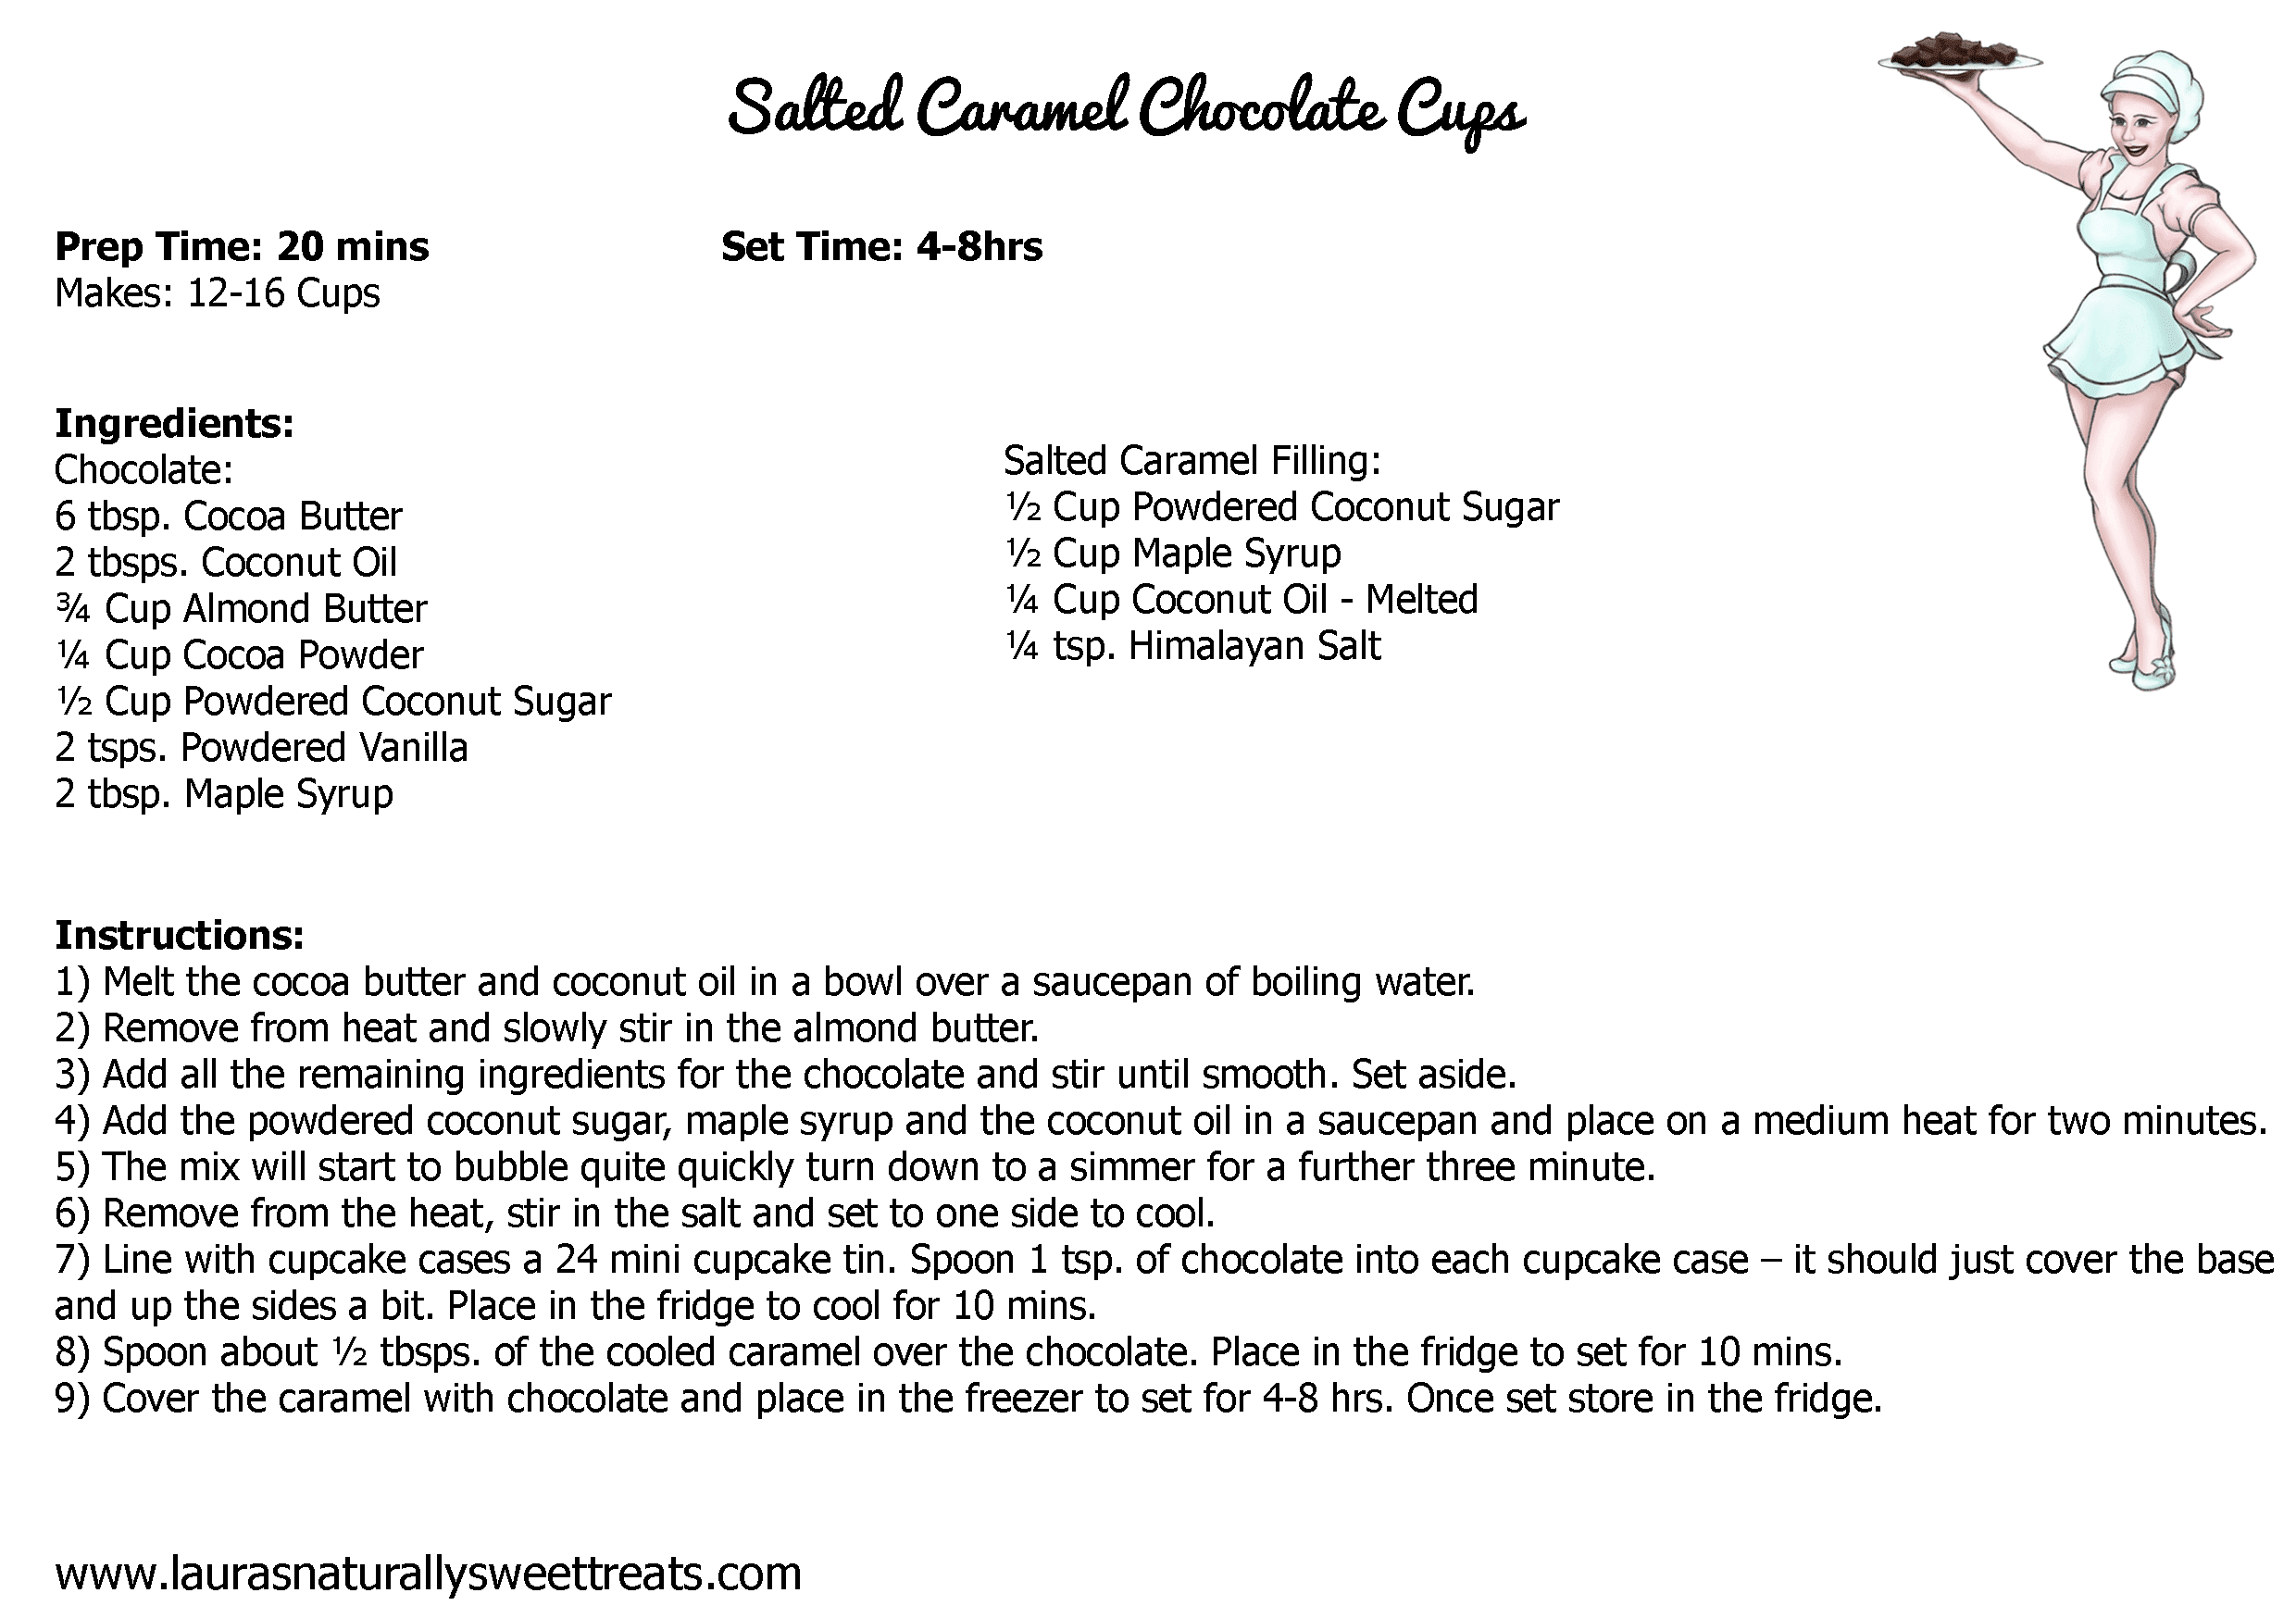 salted caramel chocolate cups recipe card